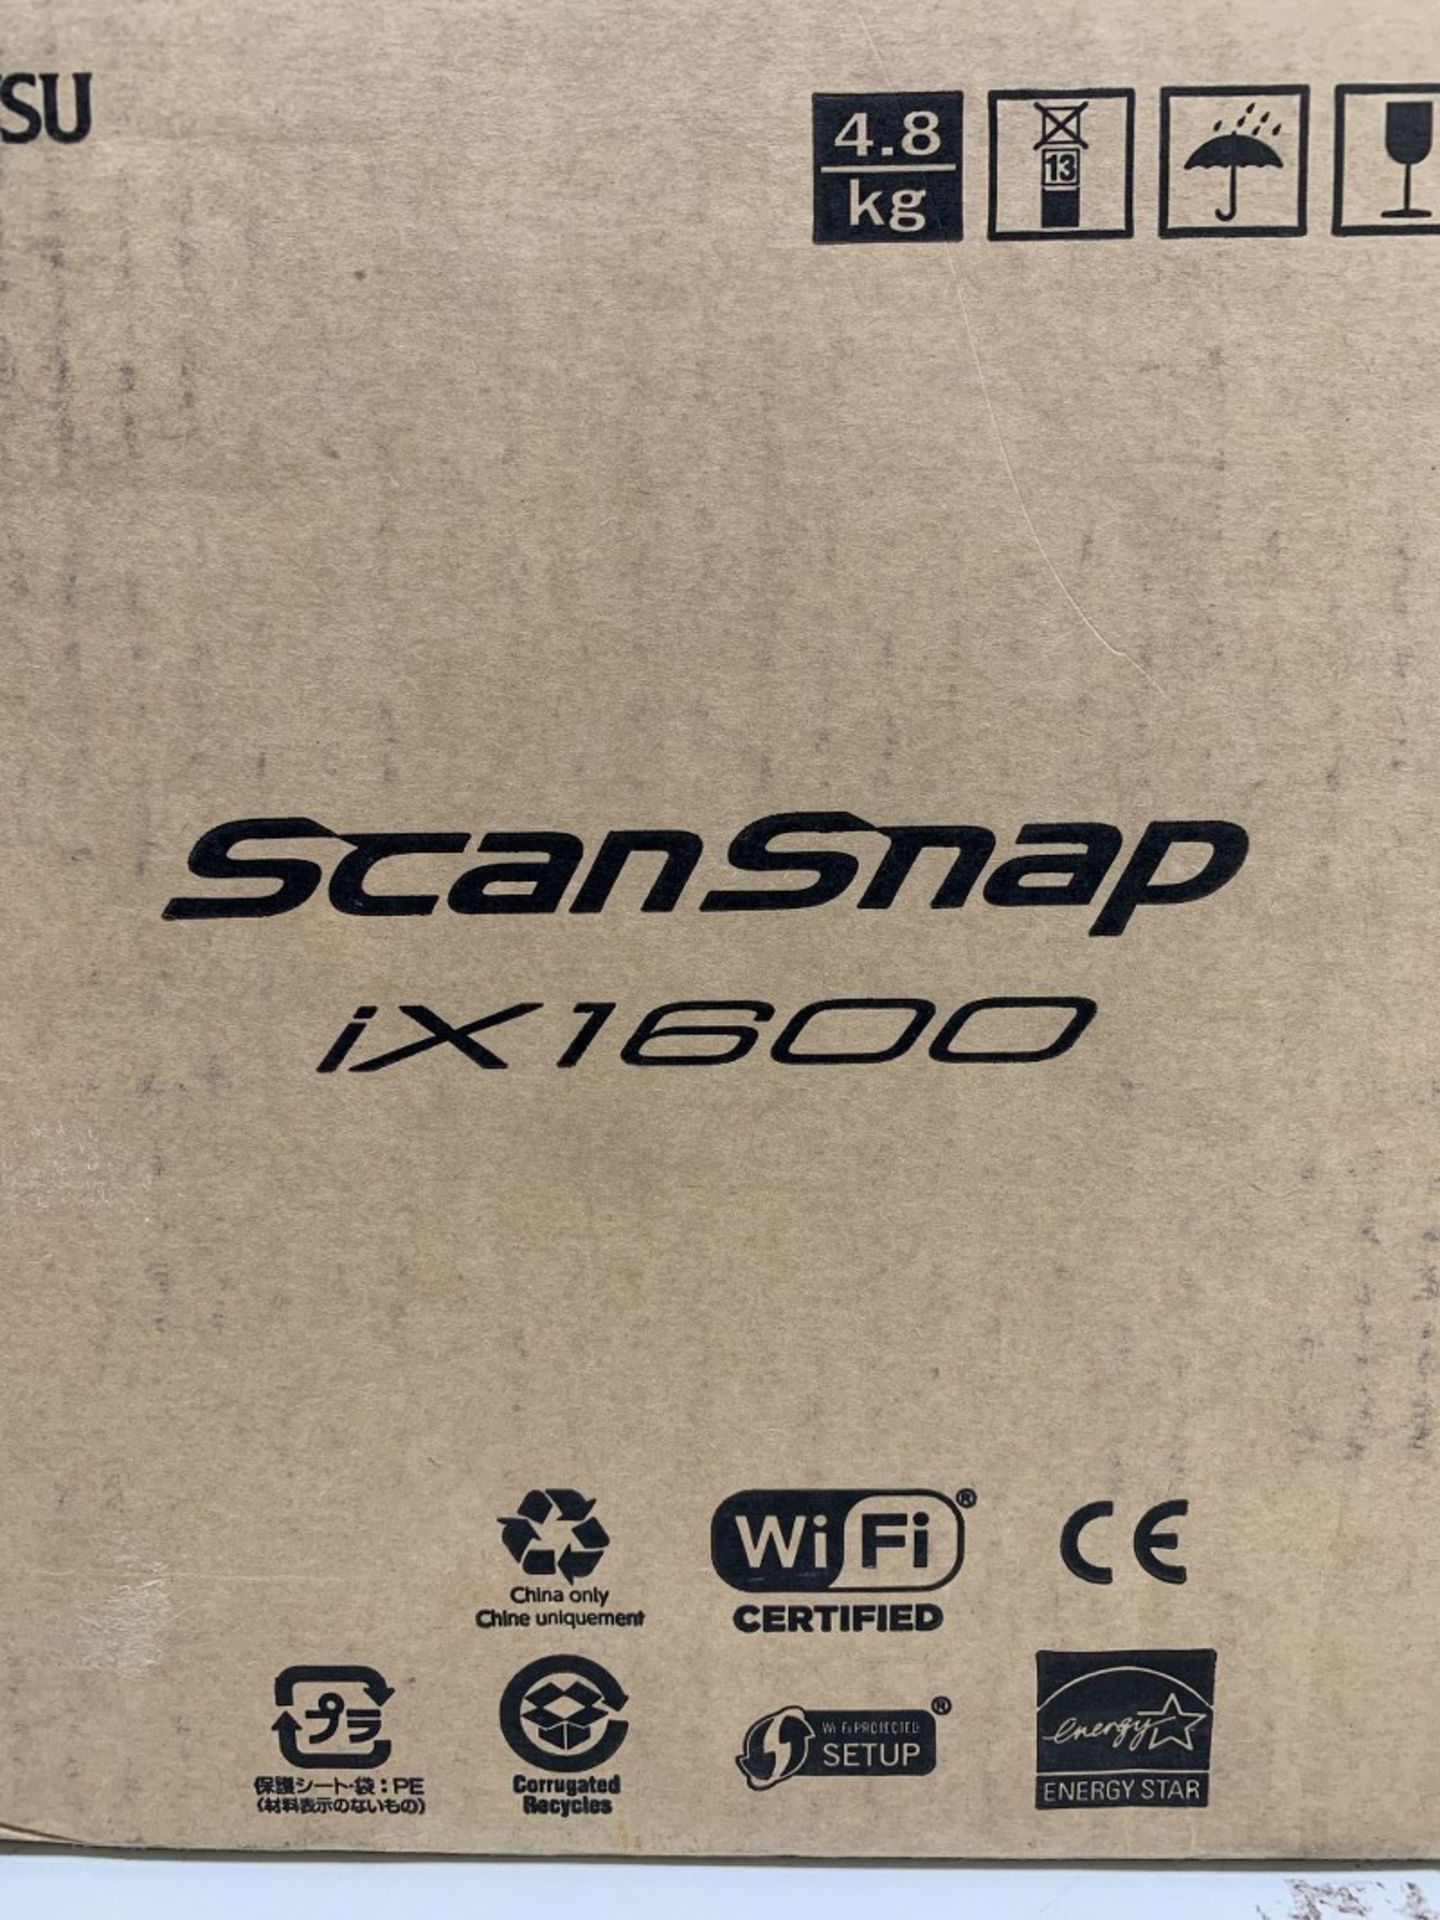 Snapscan Ix1600 - Image 2 of 2